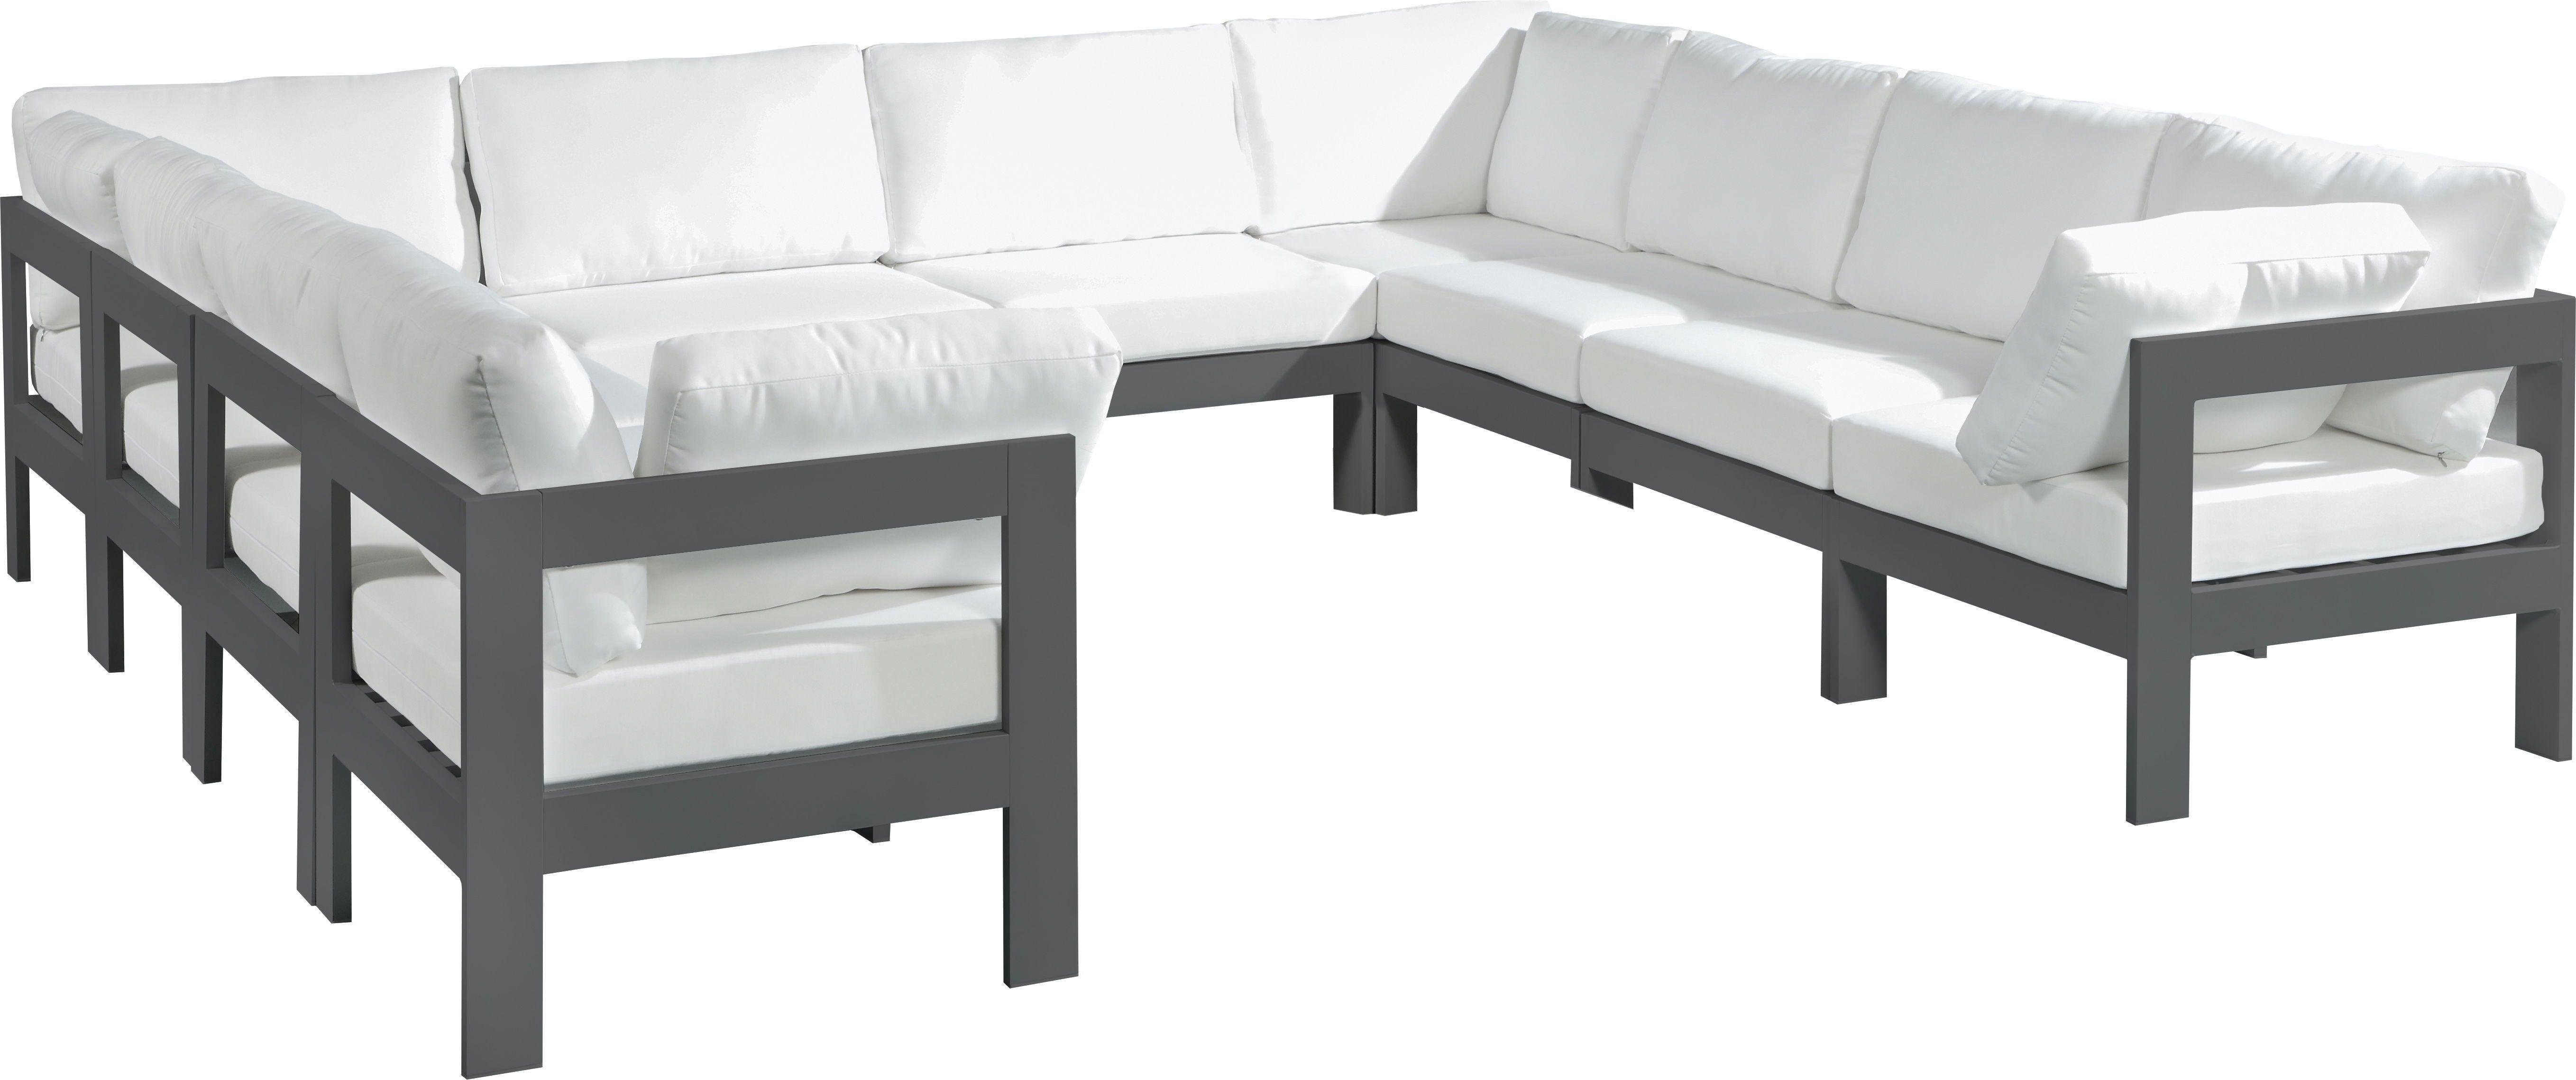 Meridian Furniture - Nizuc - Outdoor Patio Modular Sectional 10 Piece - White - Fabric - Modern & Contemporary - 5th Avenue Furniture